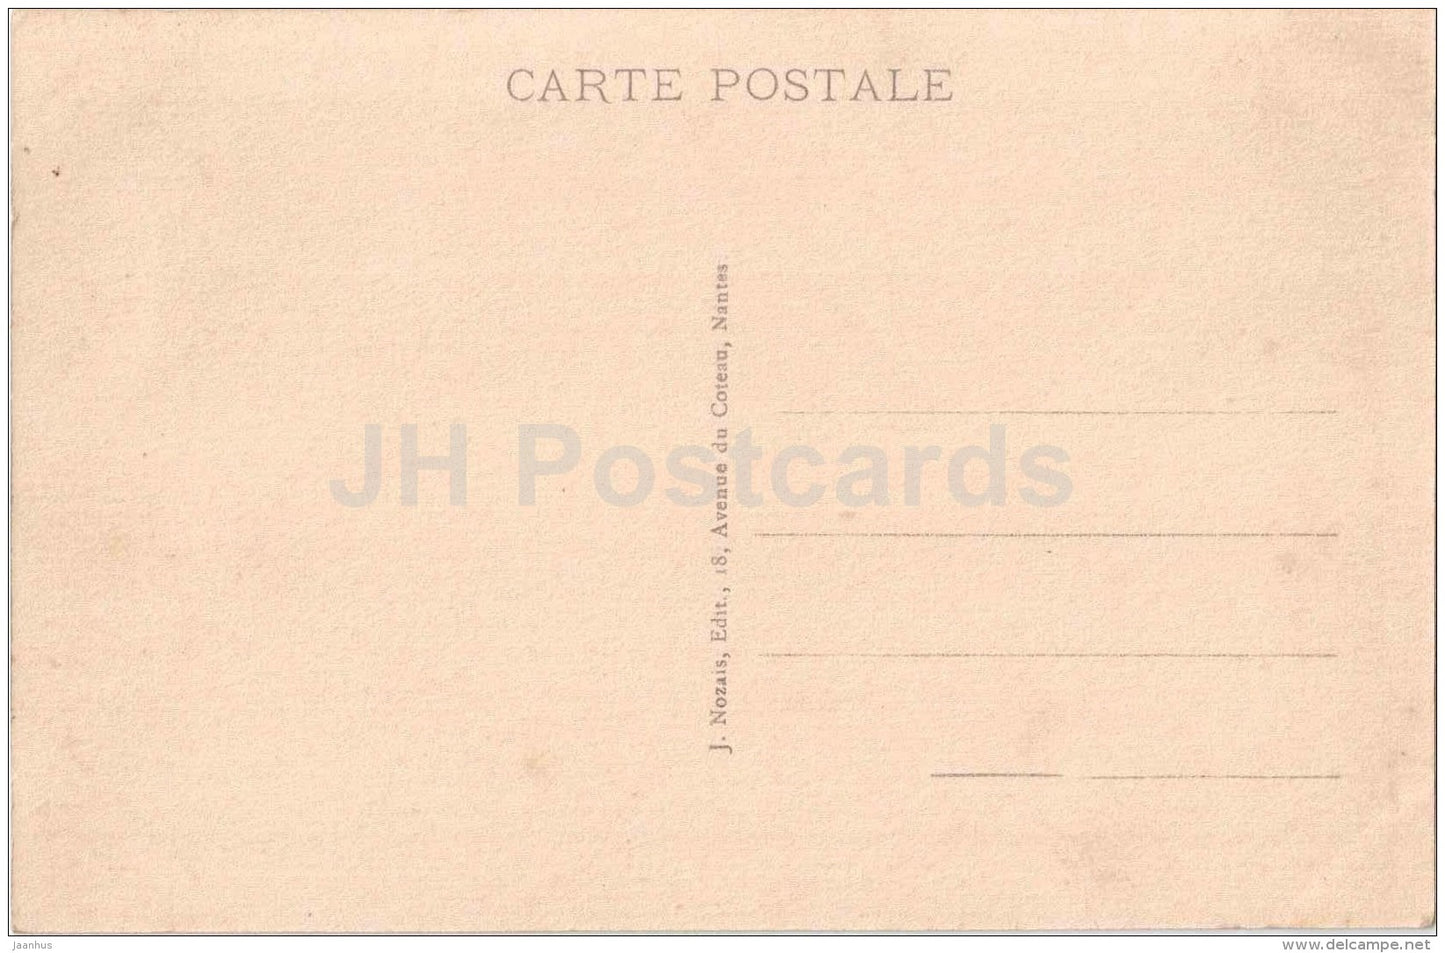 Le Pont a Transbordeur - port - Nantes - France - 45 - Gilbert - old postcard - unused - JH Postcards